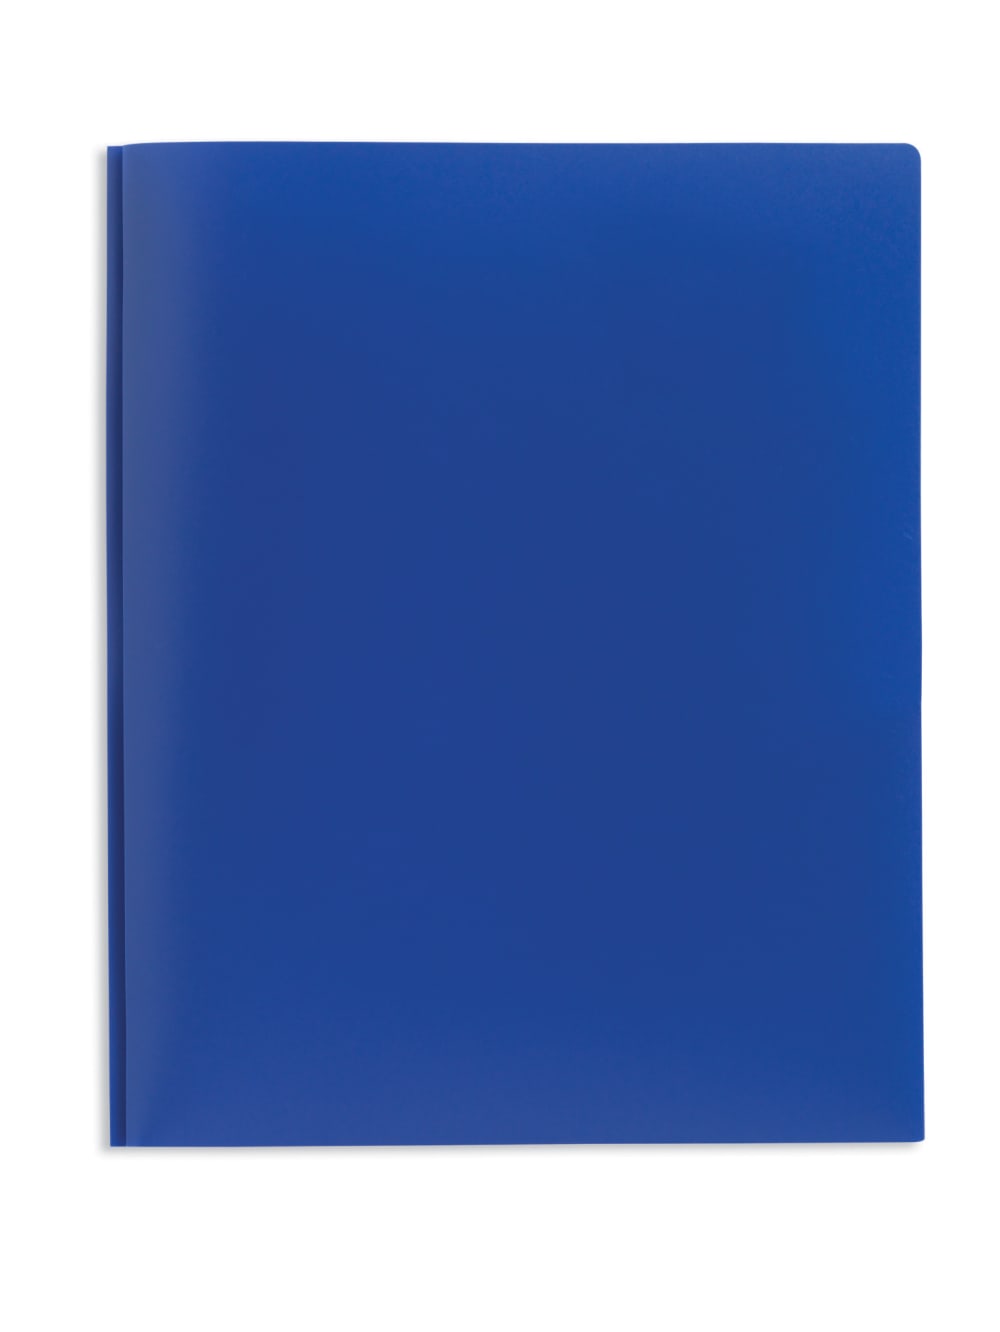 Office Depot® Brand 2-Pocket Poly Folder with Prongs, Letter Size, Blue
				
		        		












	
			
				
				 
					Item # 
					
						
							
							
								877334